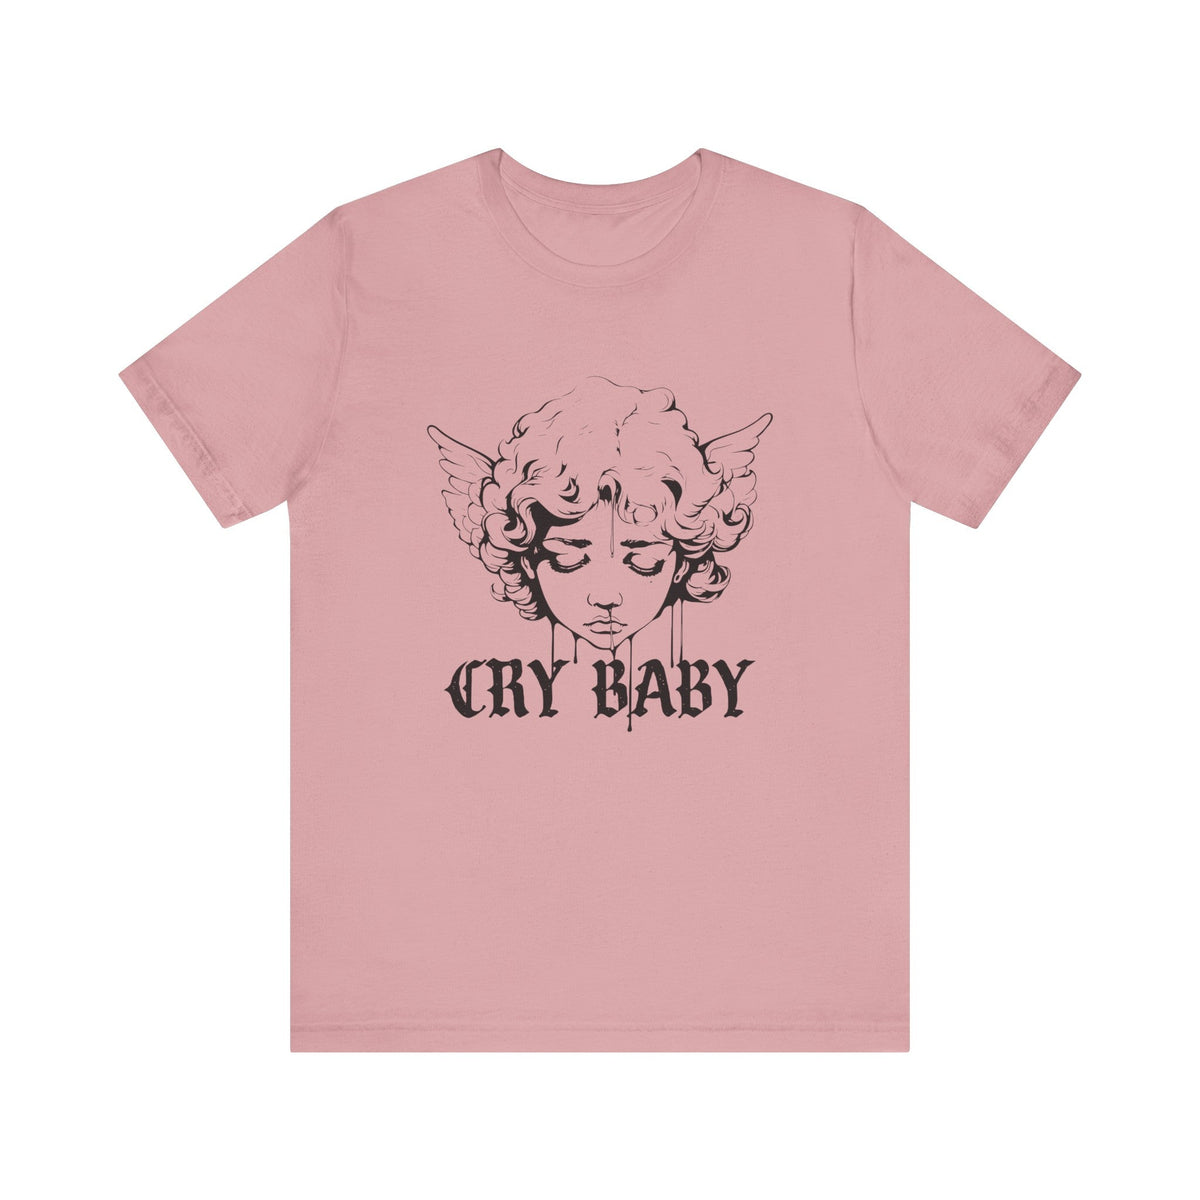 Crybaby Cherub T - Shirt - Goth Cloth Co.T - Shirt29818172742221321629